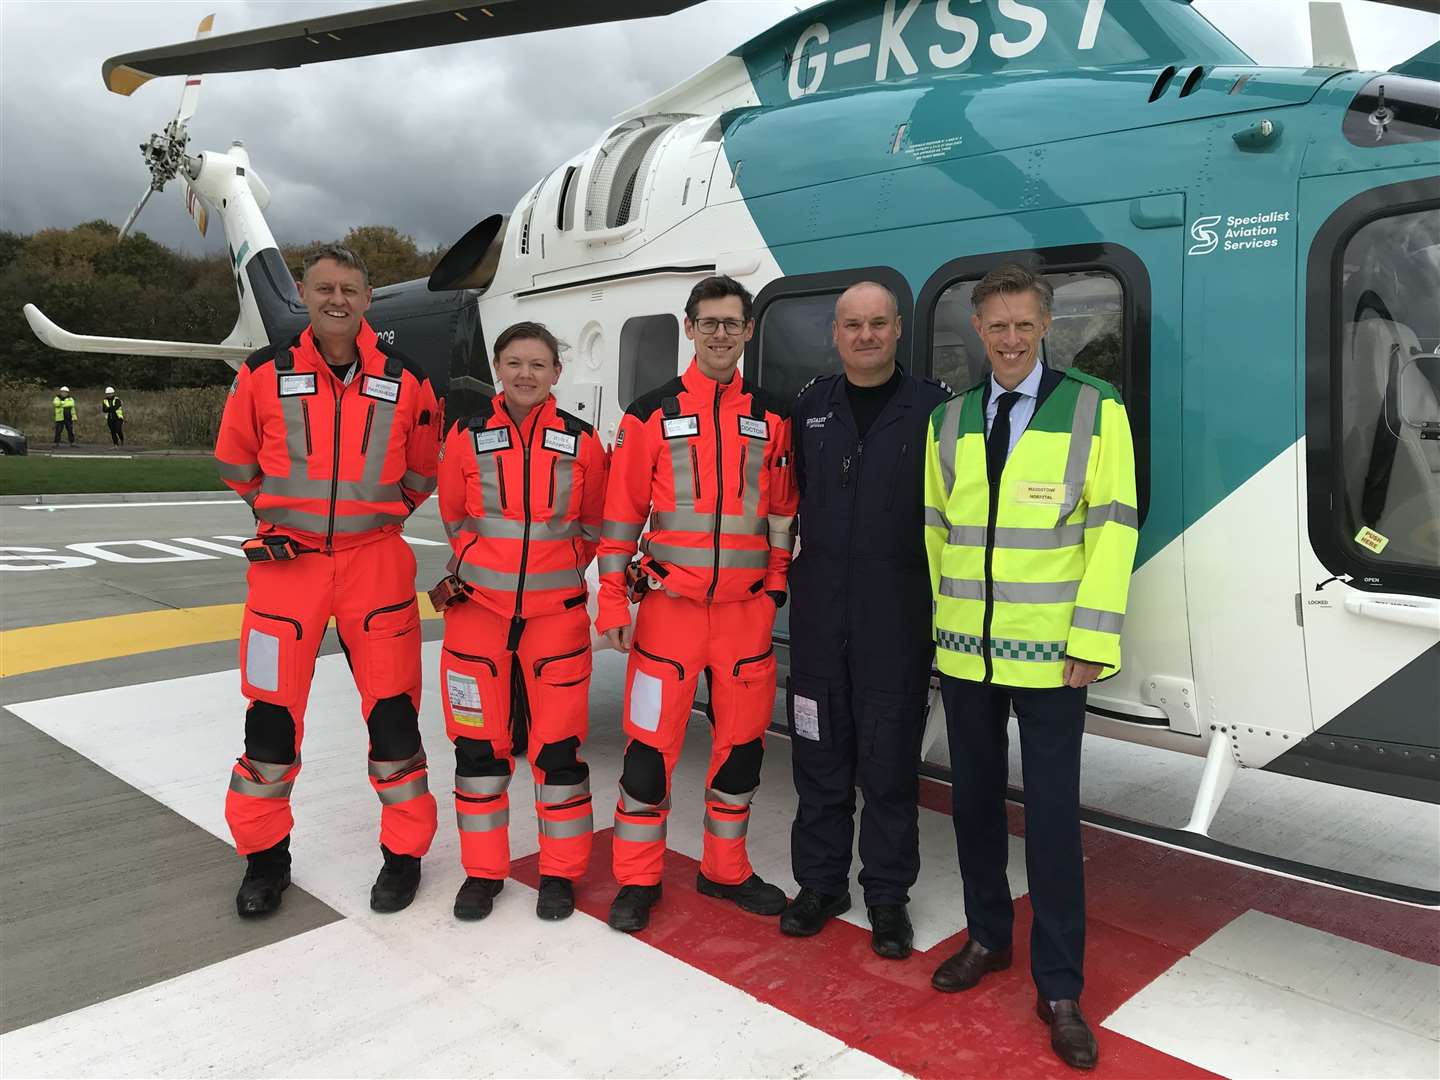 Maidstone Hospital's helipad is now ready to use